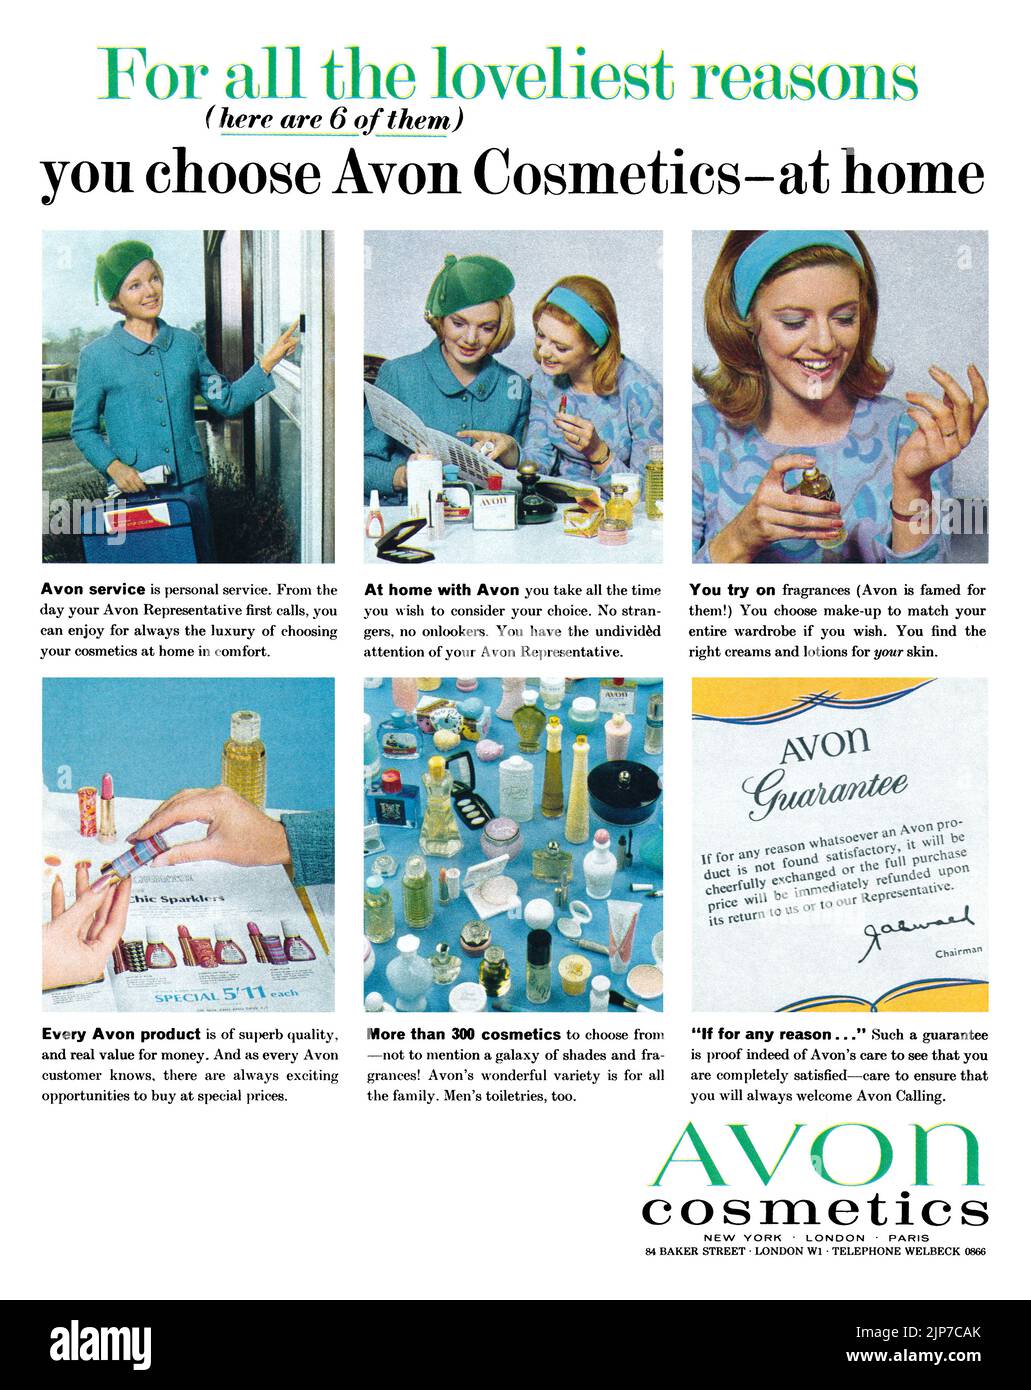 1969 British advertisement for Avon Cosmetics home visits. Stock Photo